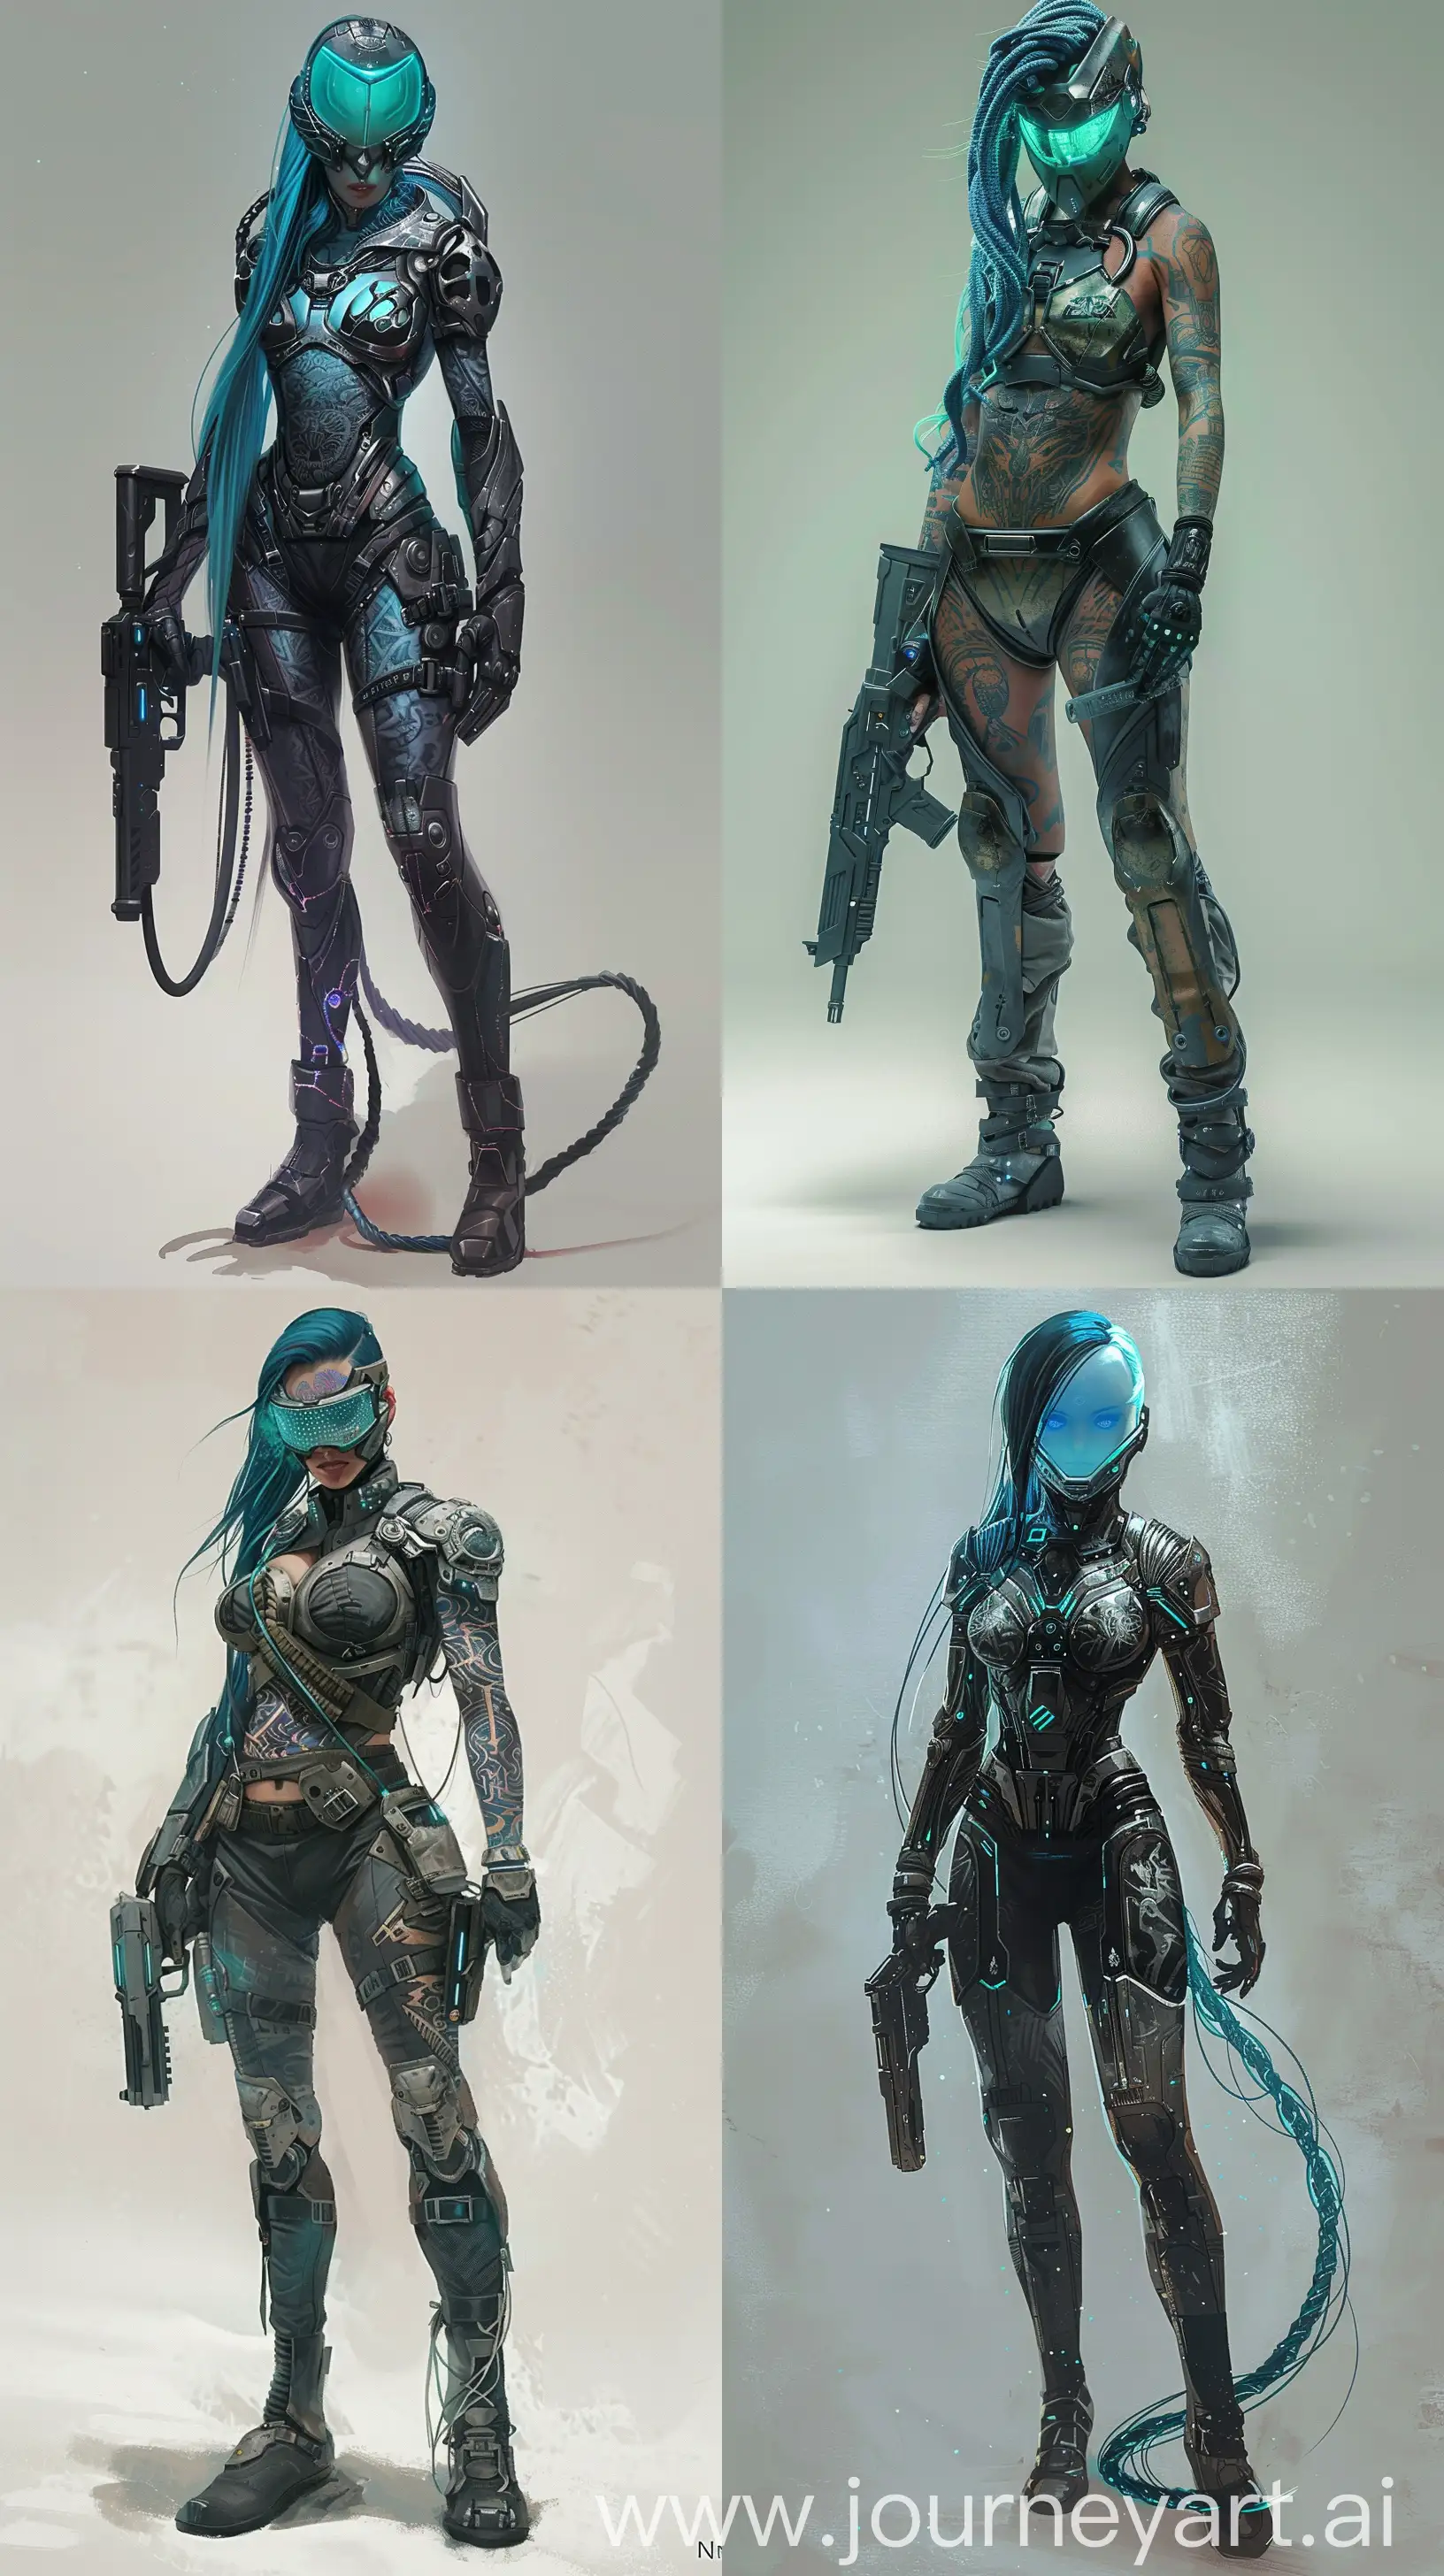 Futuristic-Female-Bounty-Hunter-in-Sleek-Armor-with-Elegant-Gun